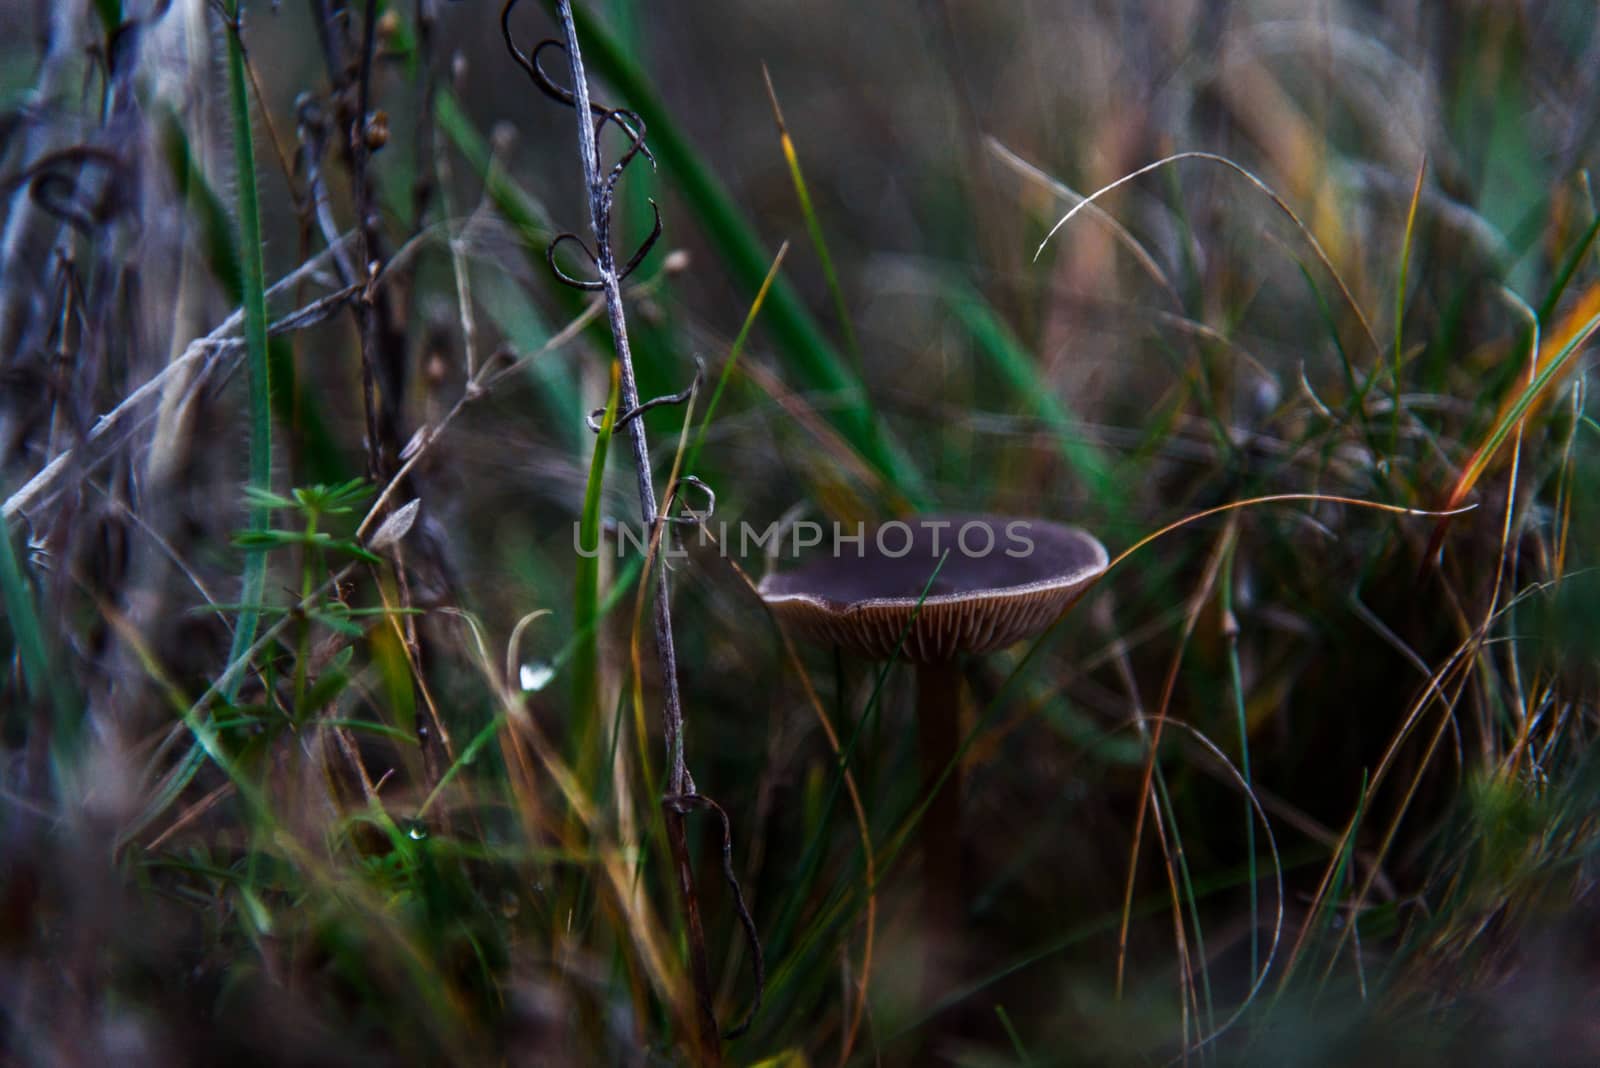 Mushroom grey little in the grass closeup by WolfWilhelm